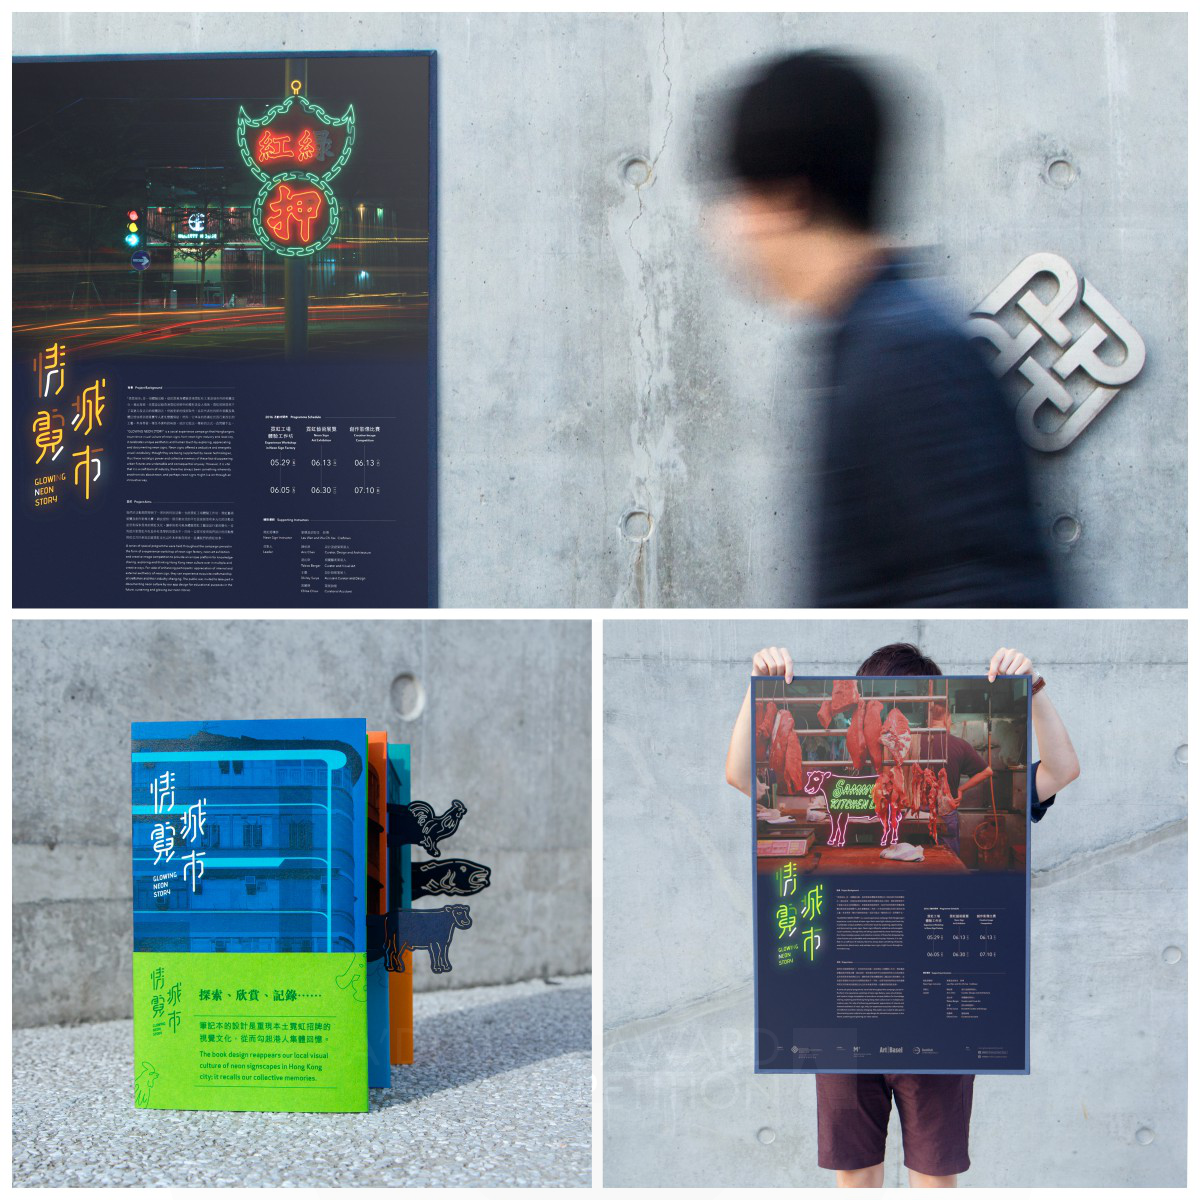 Glowing Neon Story Campaign Visual Identity by Kwan Kei Heung